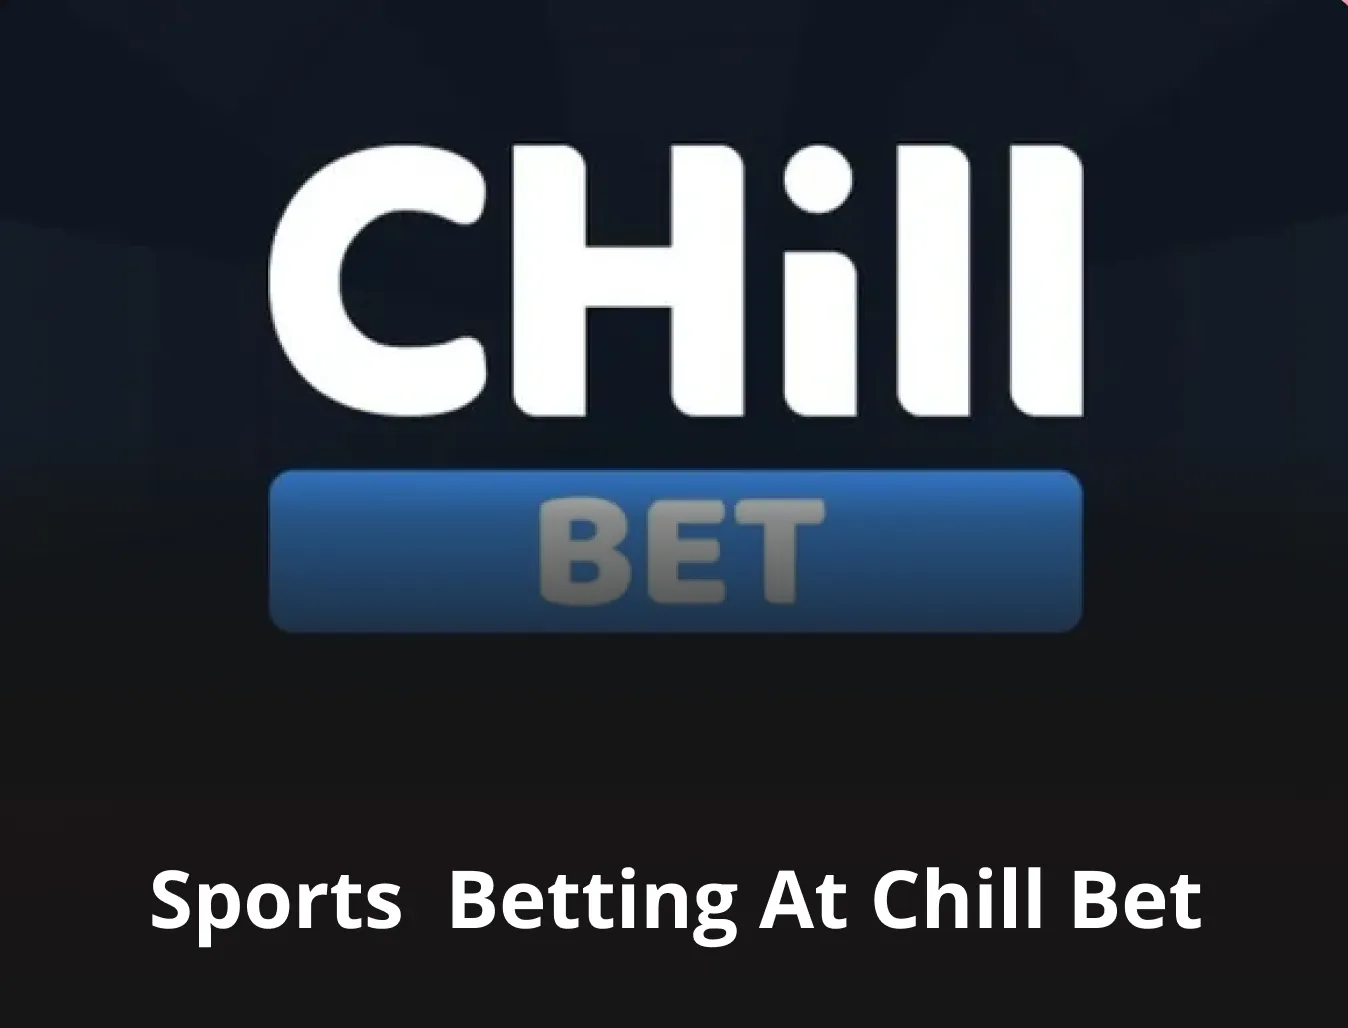 chill bet sport betting